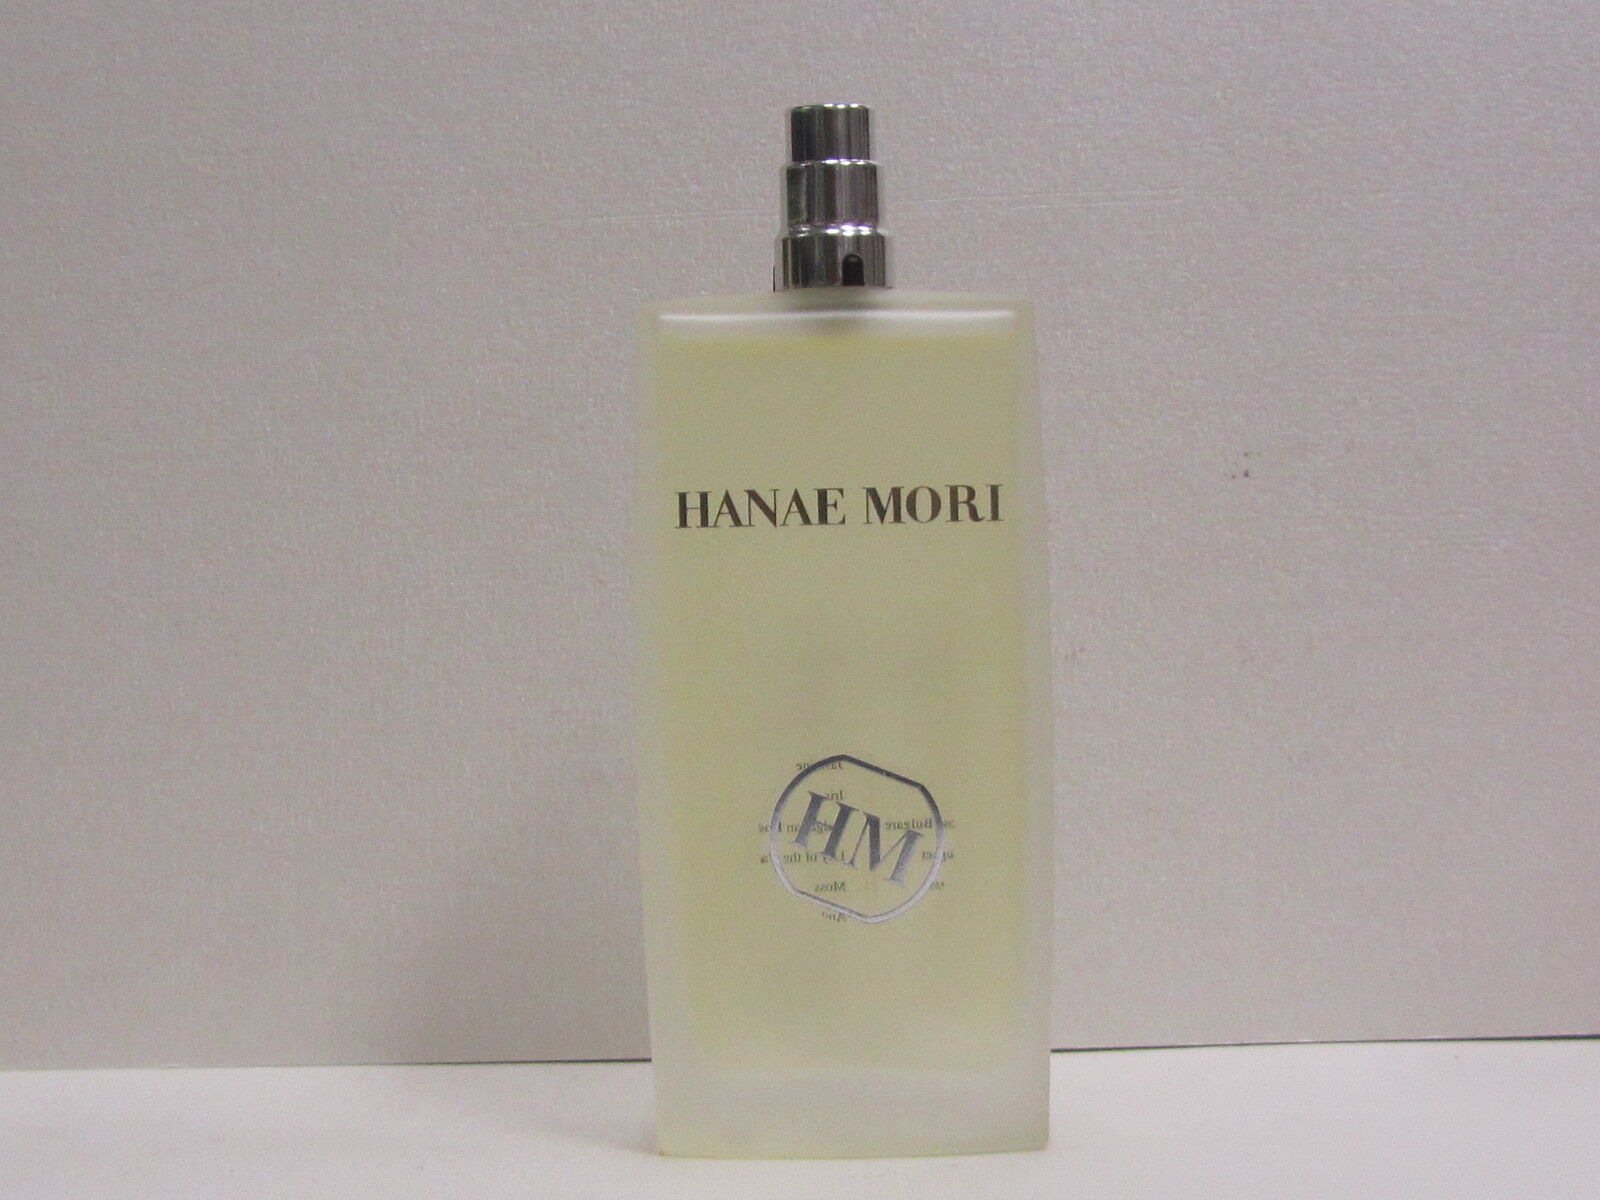 Hanae Mori by Hanae Mori For Men 3.4oz Eau de Toilette Spray Tester Brand New